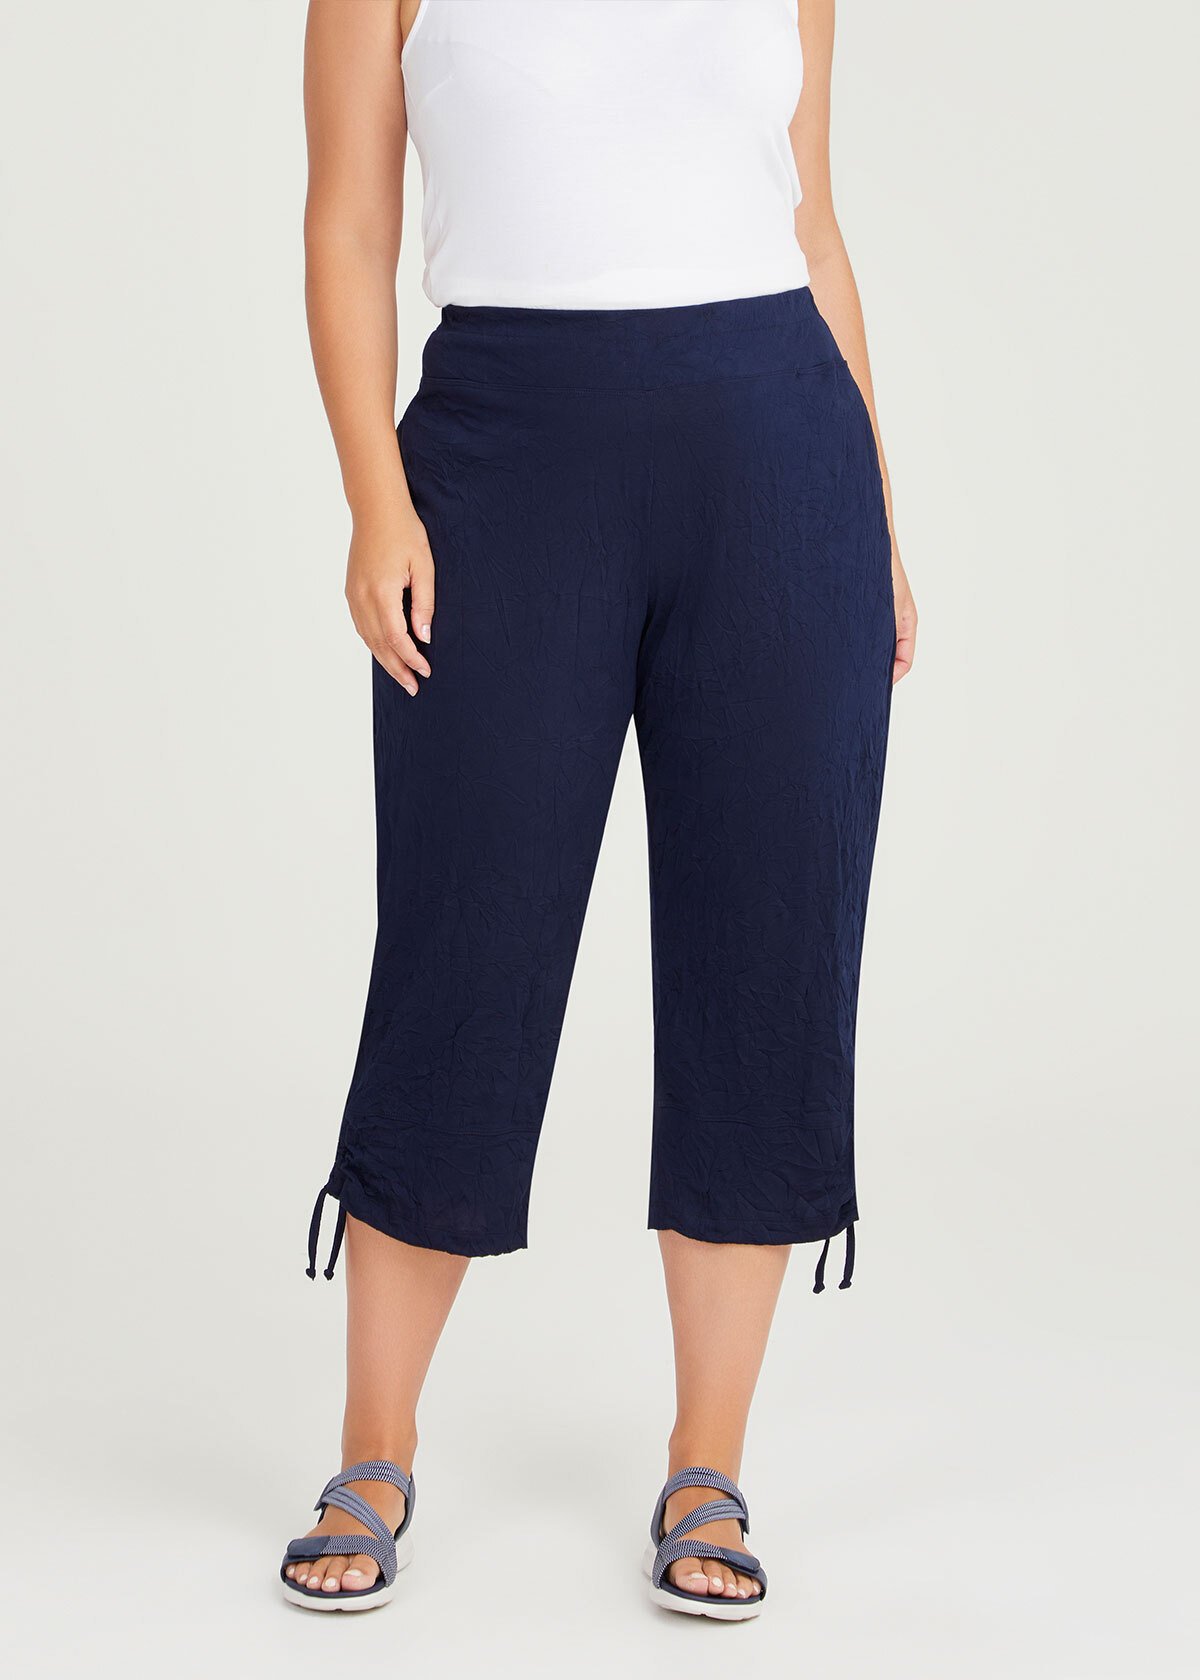 Shop Plus Size Summer Essential Crop Pant in Blue